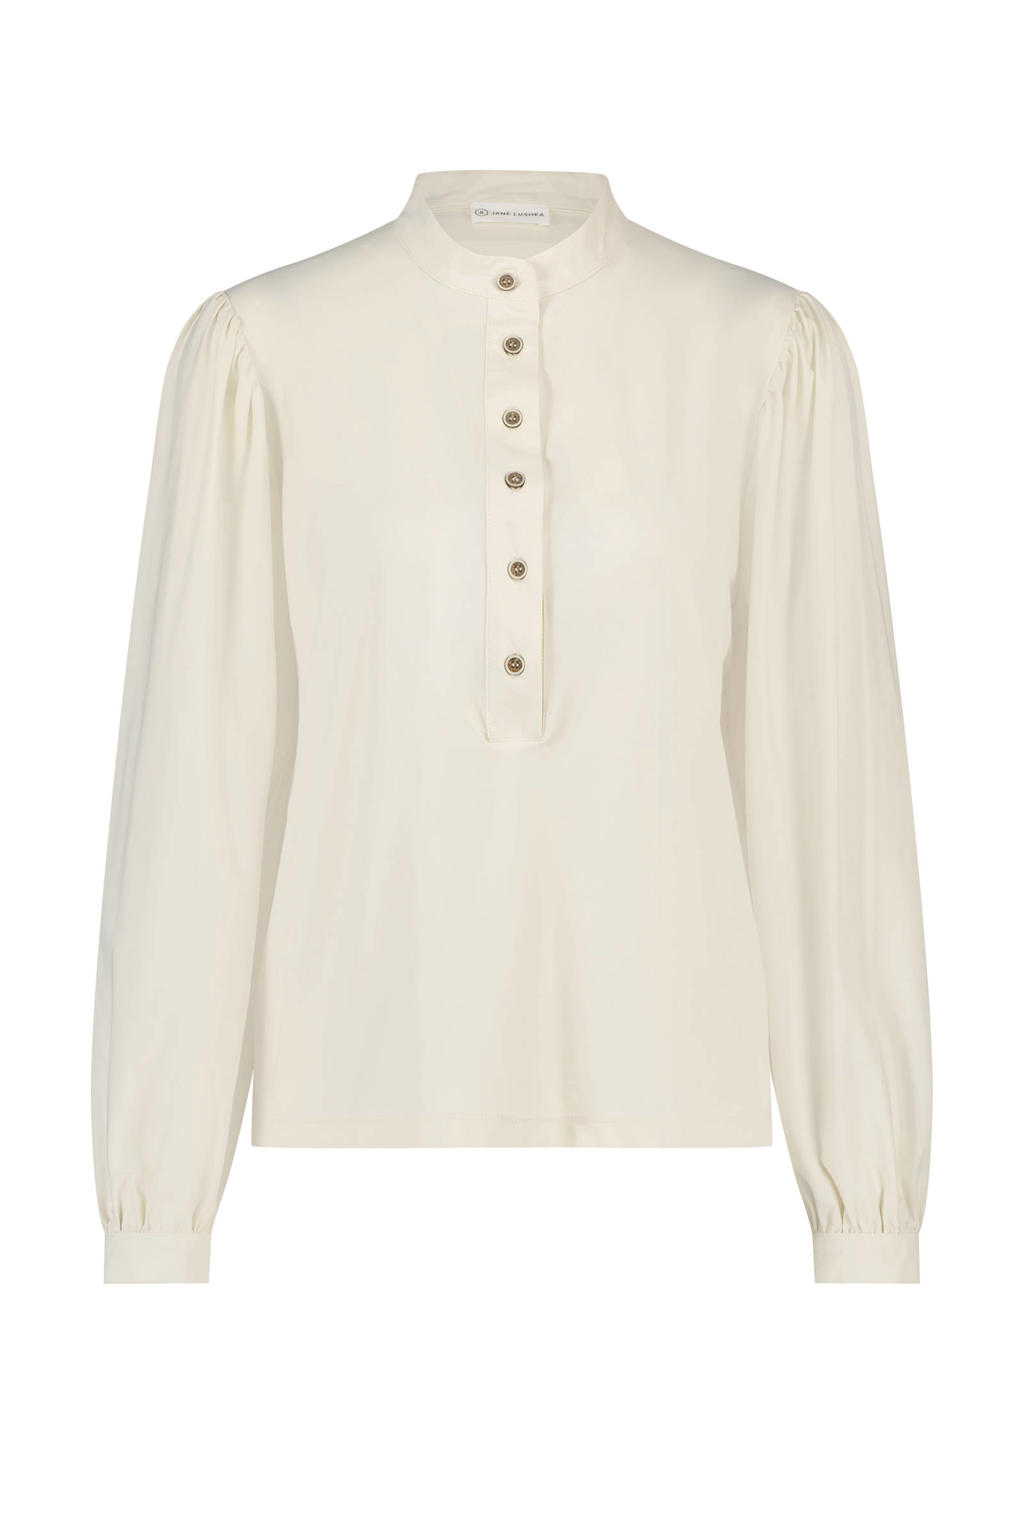 Jane Lushka blouse Top Kira van travelstof off white